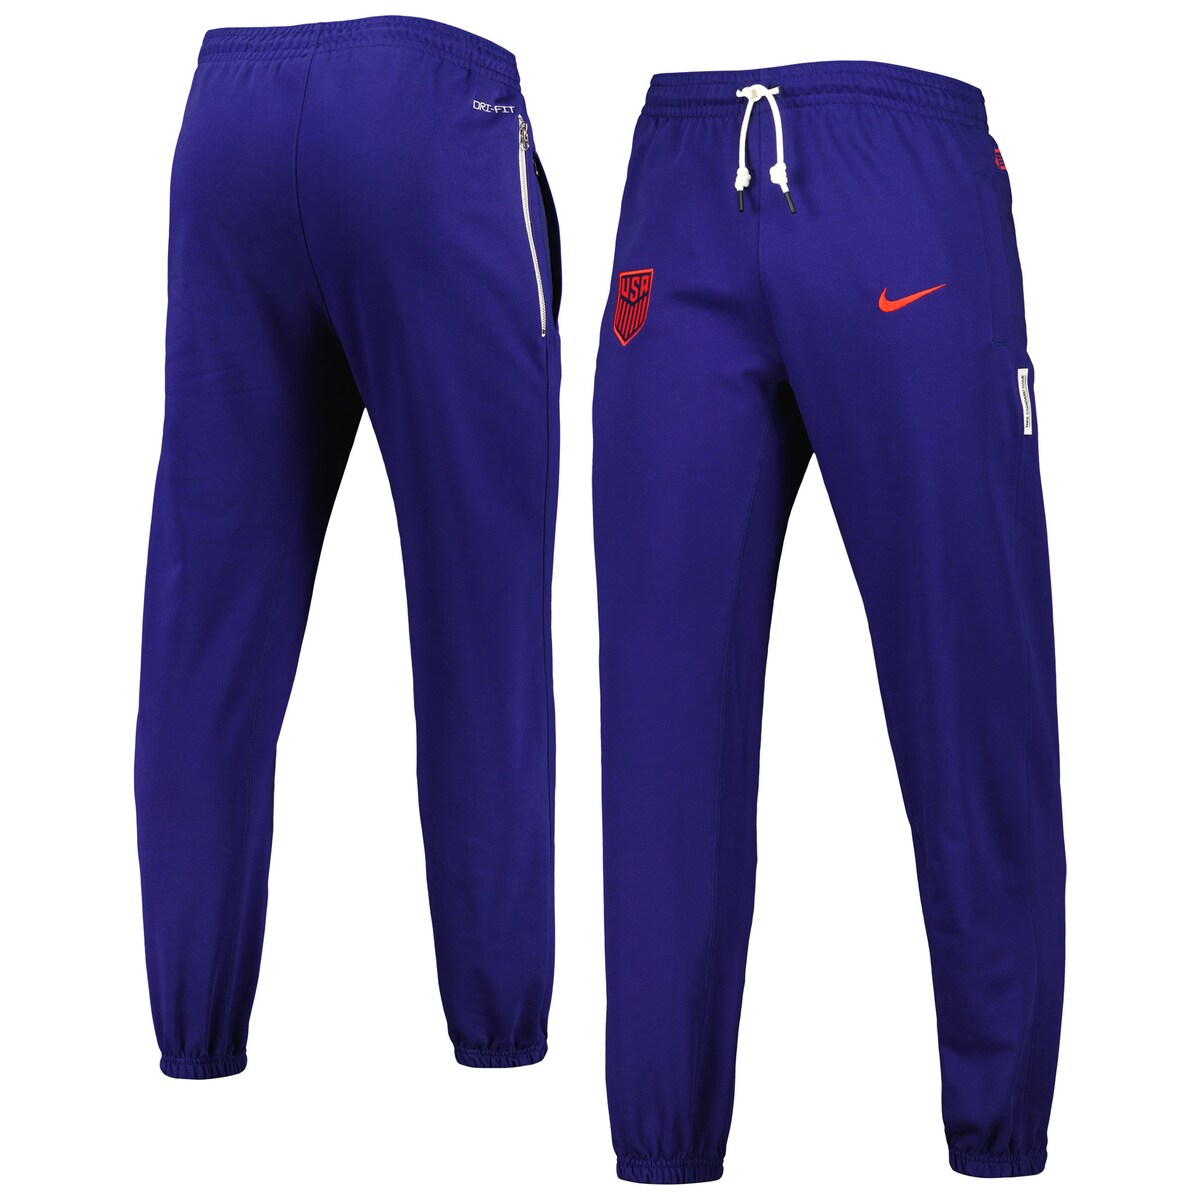 NATIONAL TEAM AJ\ pc Nike iCL Y lCr[ (NIK F23 Men's Standard Issue Pant)